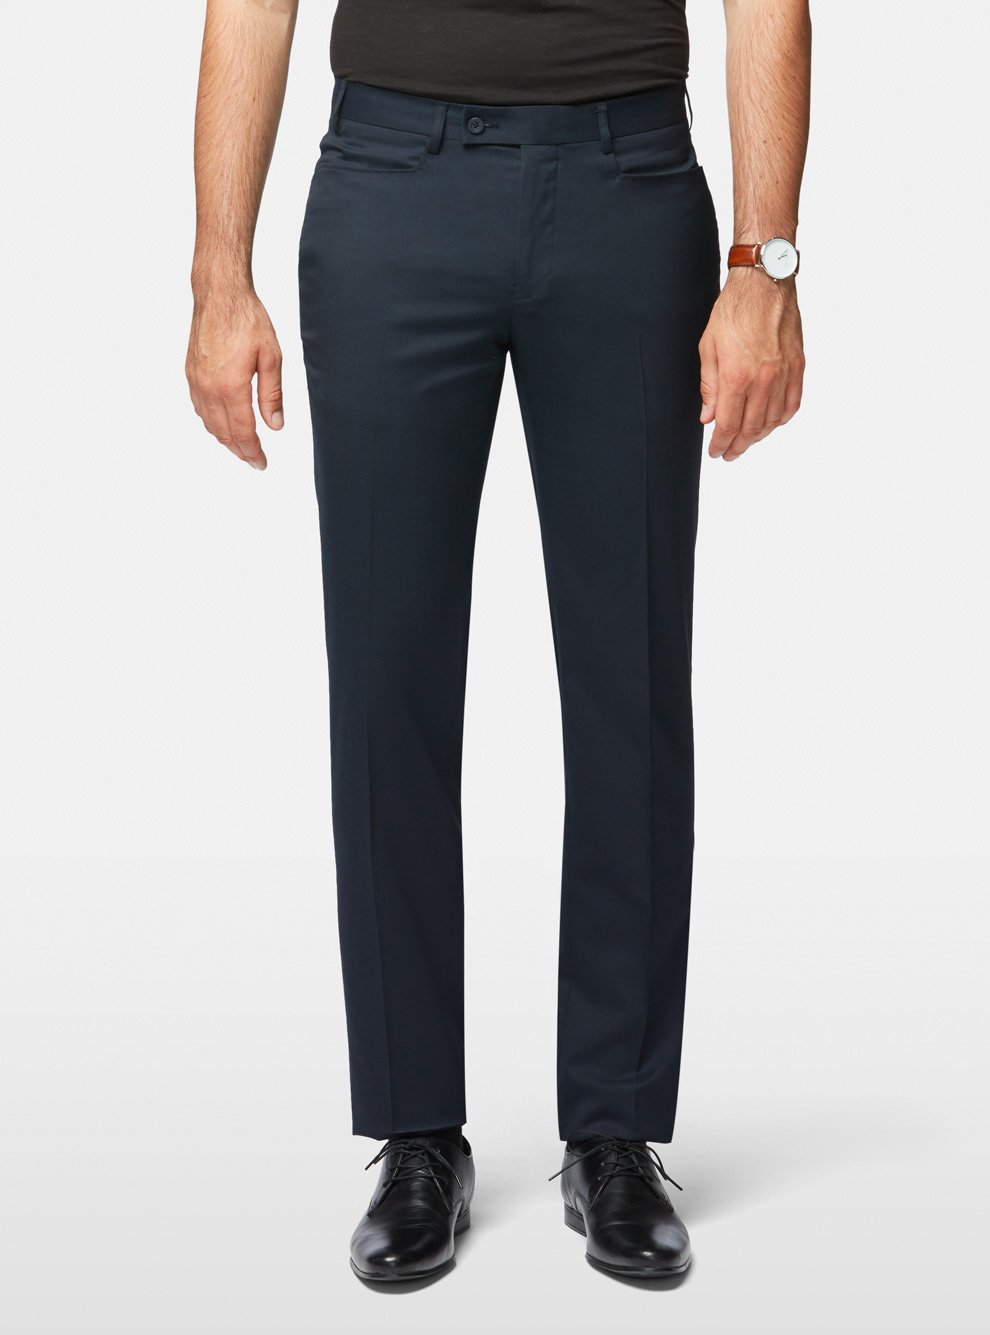 Mens Stretch Slim Fit Dress Pants Casual Business Office Work Suit Pant  Expandable Waist Comfy Flat-Front Athletic Golf Pants Black at Amazon Men's  Clothing store